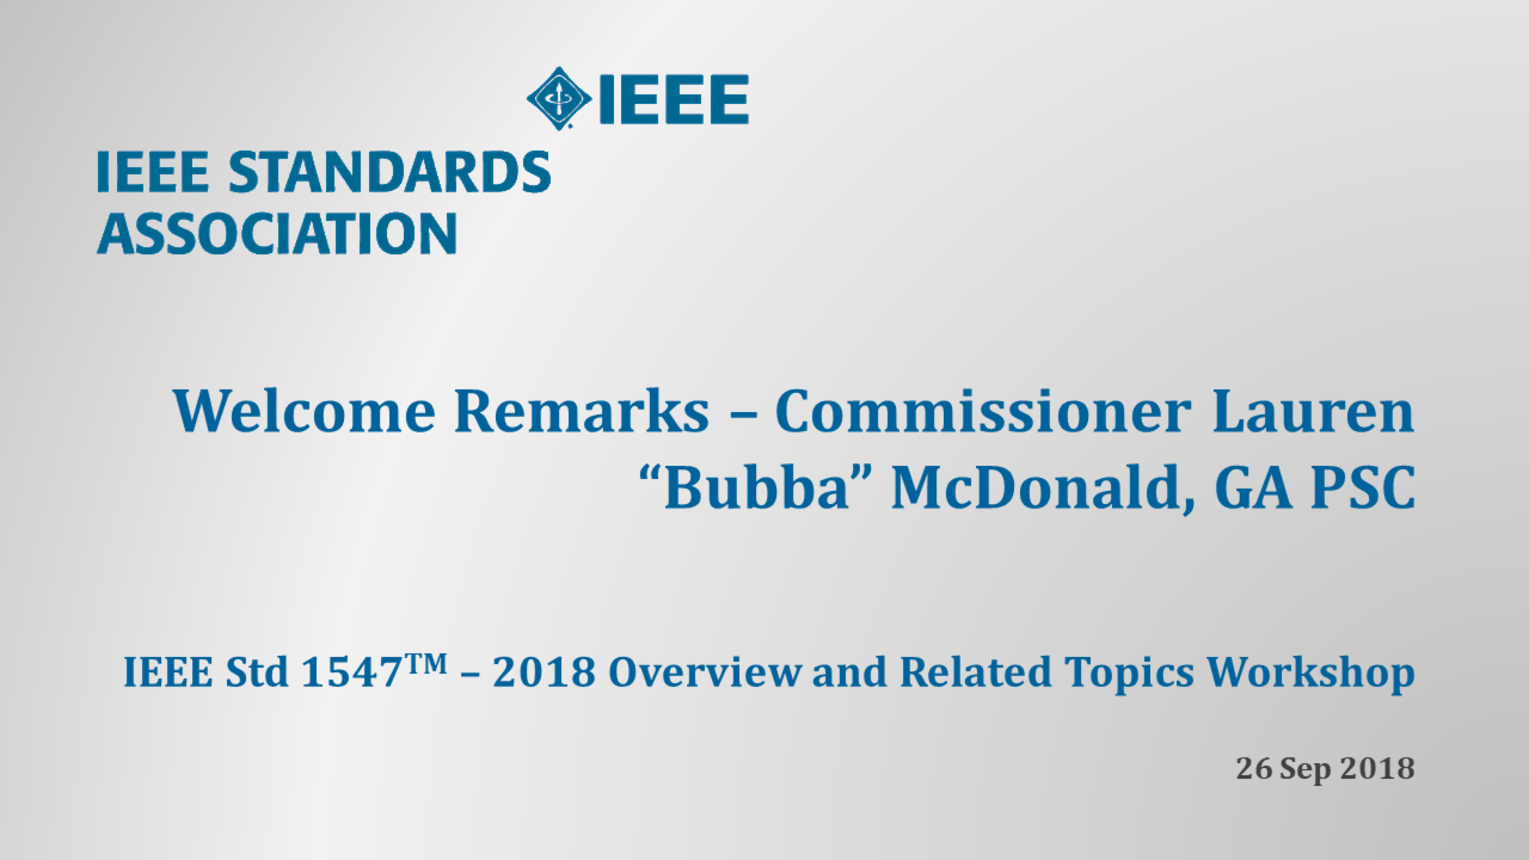 IEEE Std 1547 Workshop - NERC - Atlanta, GA - Sept. 2018: Welcome Remarks - GA PSC Commissioneer McDonald